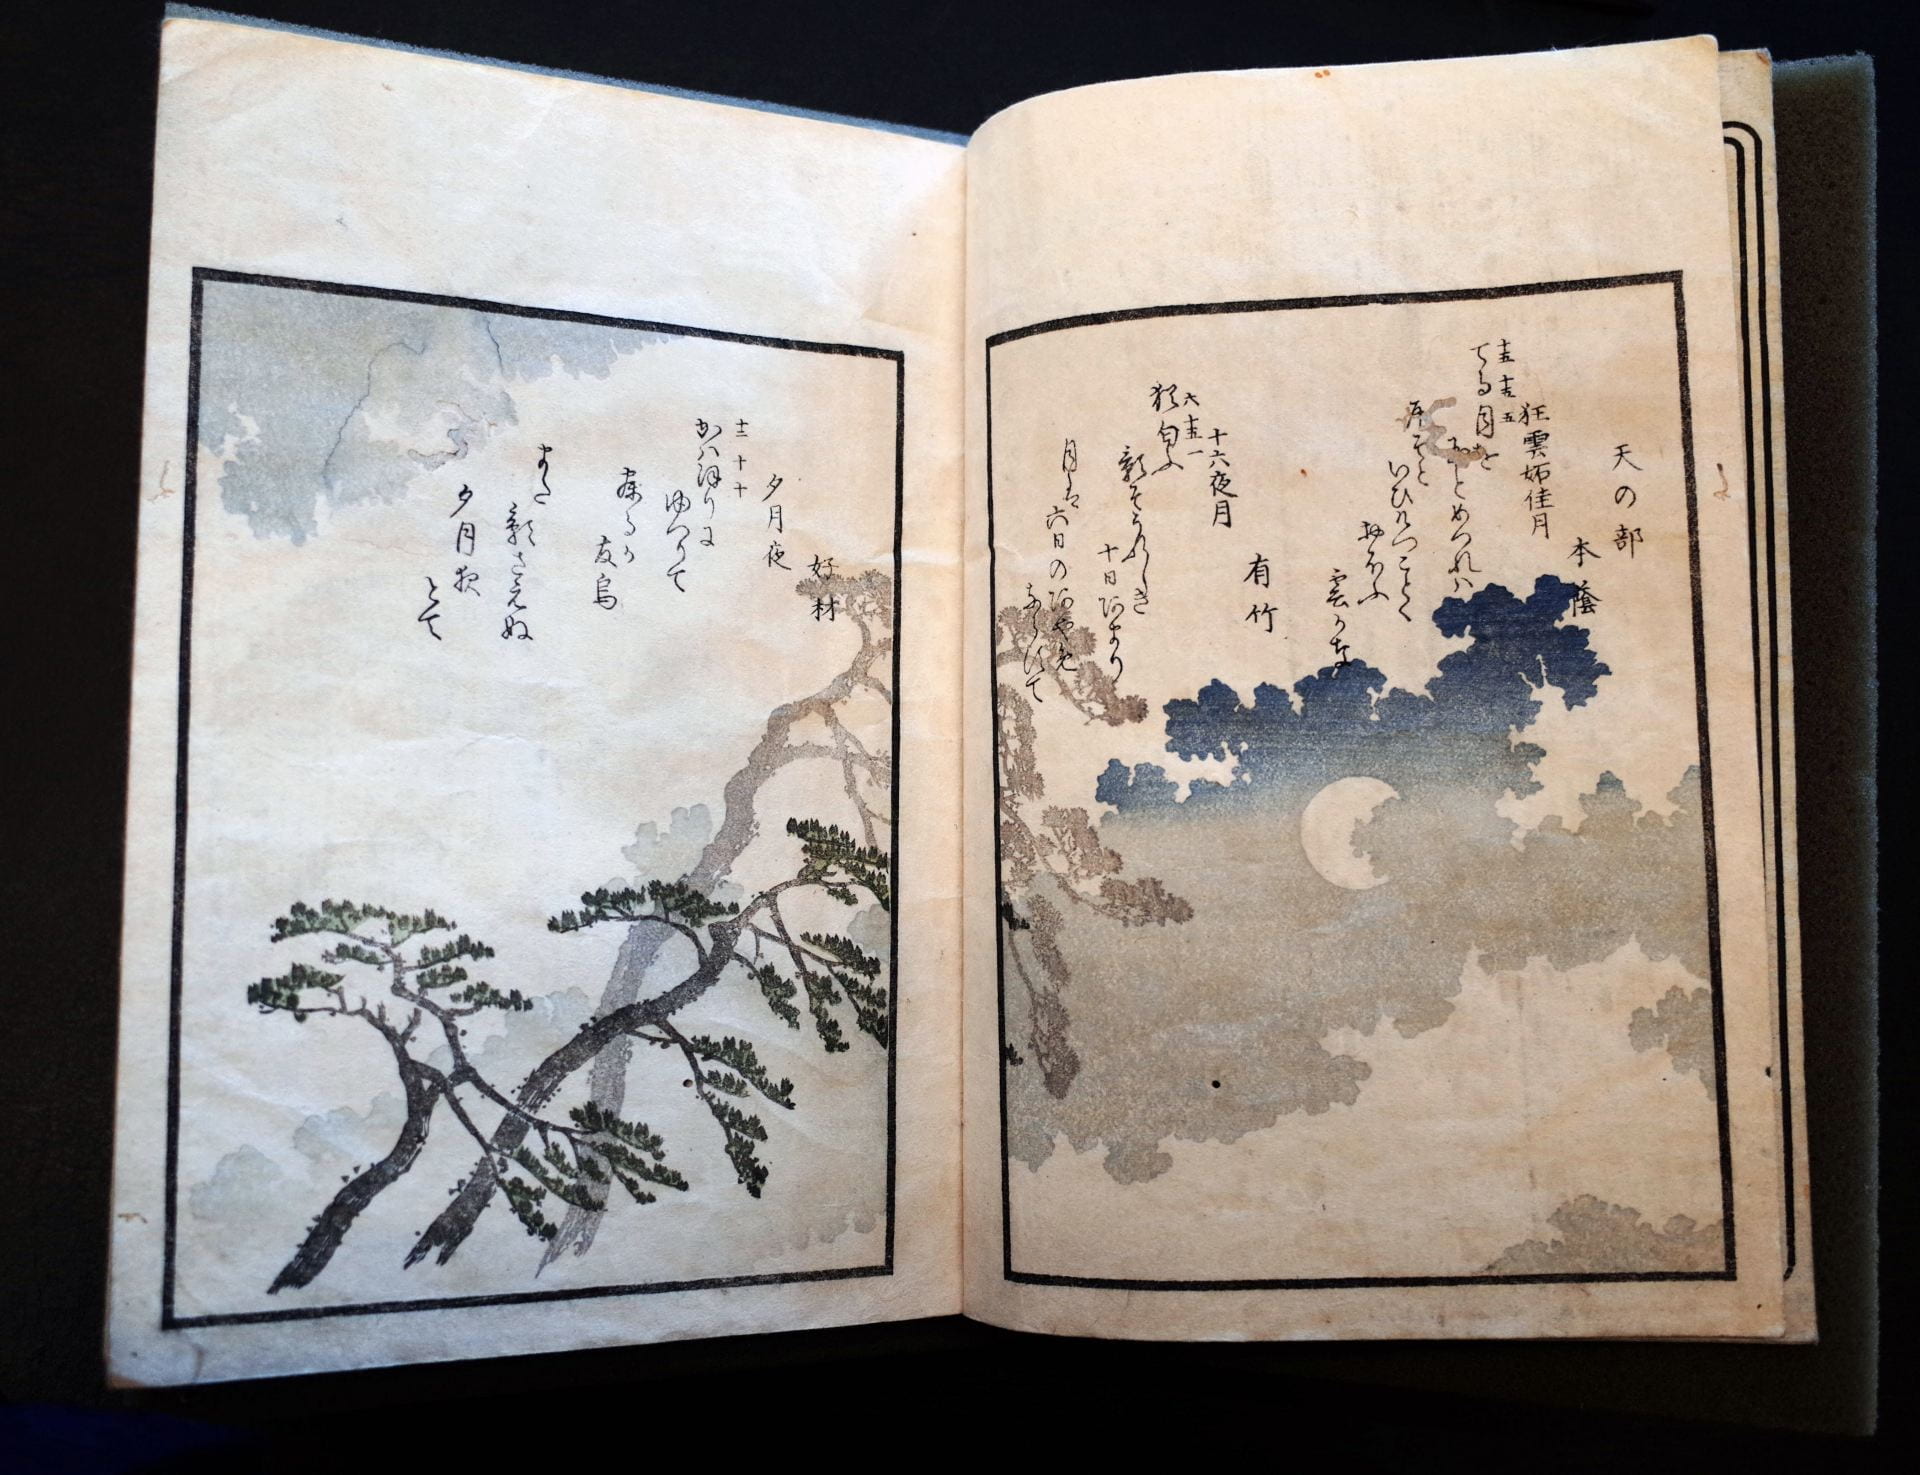 TOTOYA HOKKEI 魚屋北渓, SANSAI TSUKI HYAKUSHU 三才月百首, 1829